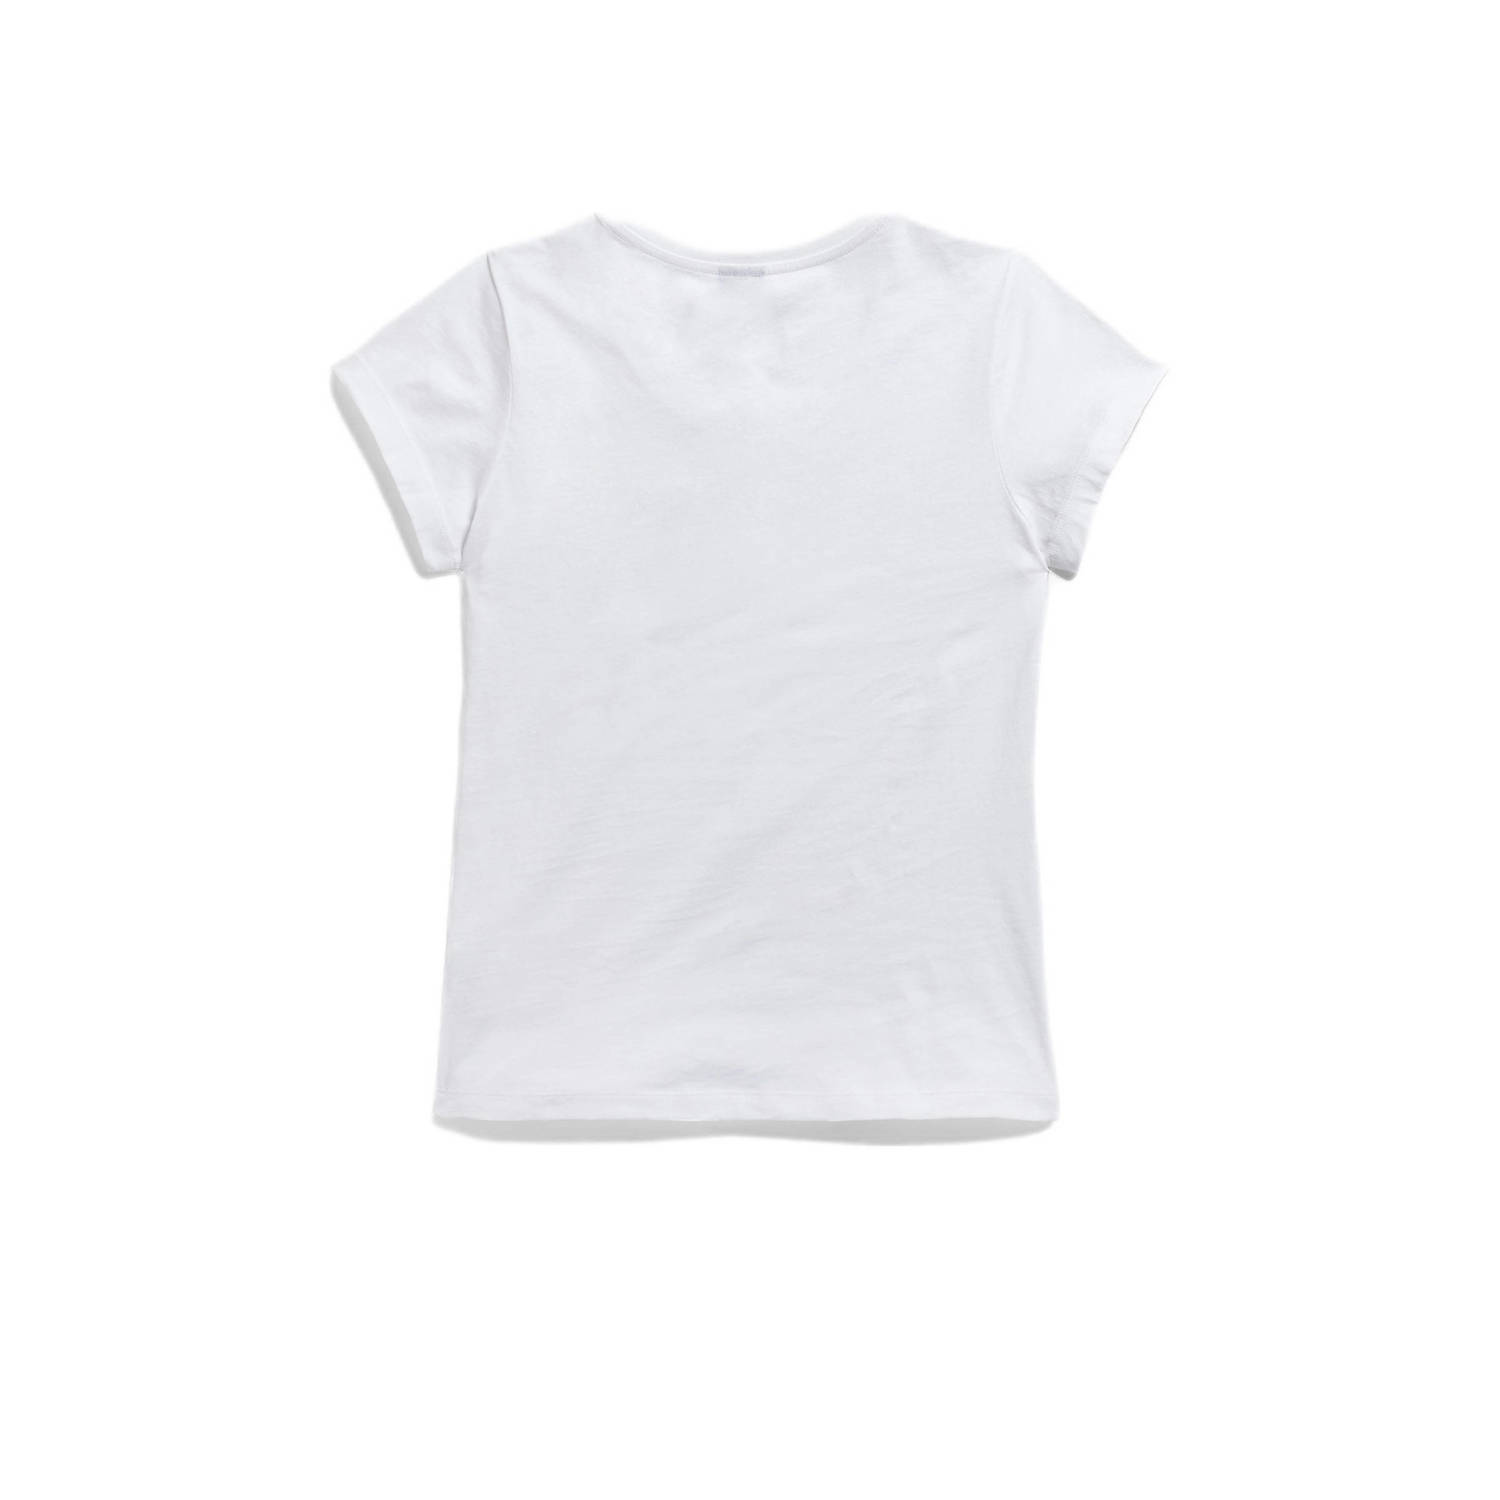 G-Star RAW T-shirt Eyben van biologisch katoen wit